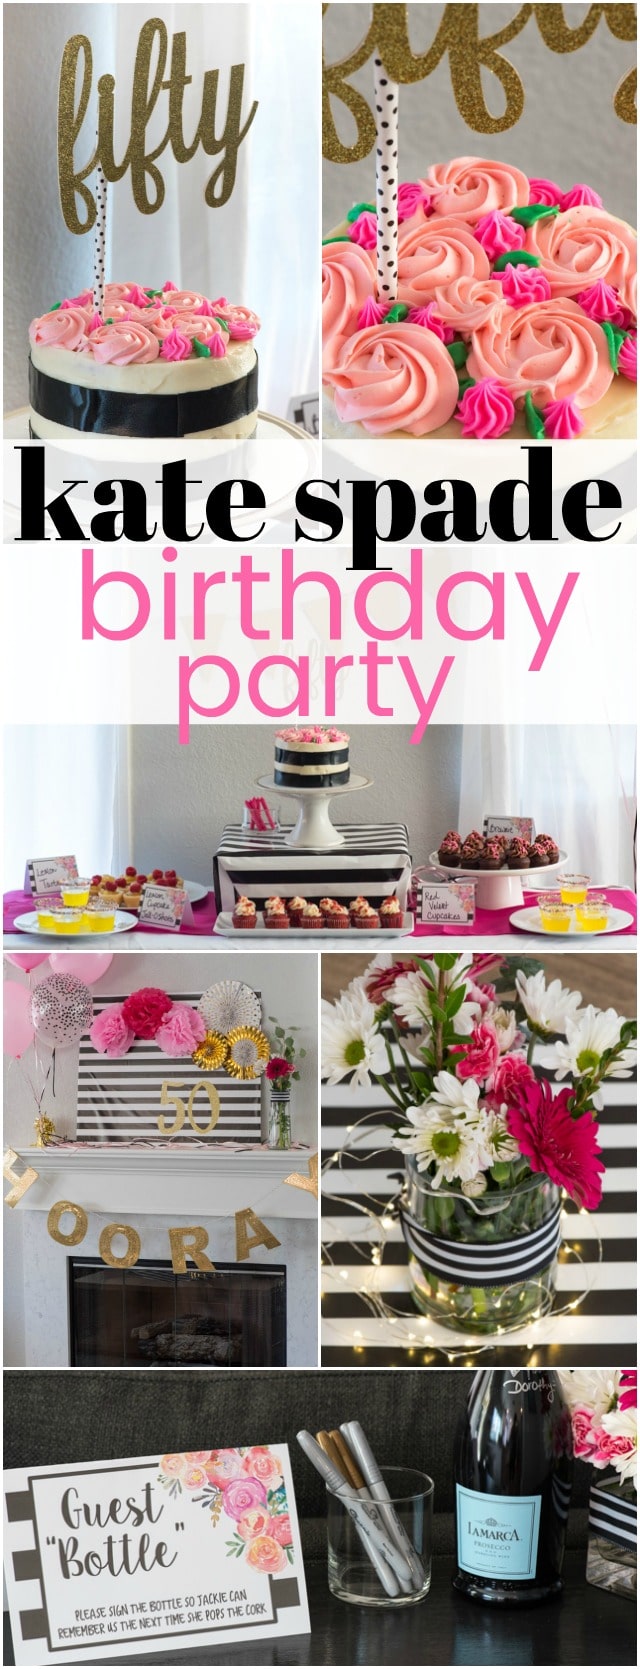 Kate Spade Birthday Party Ideas - EASY GOOD IDEAS